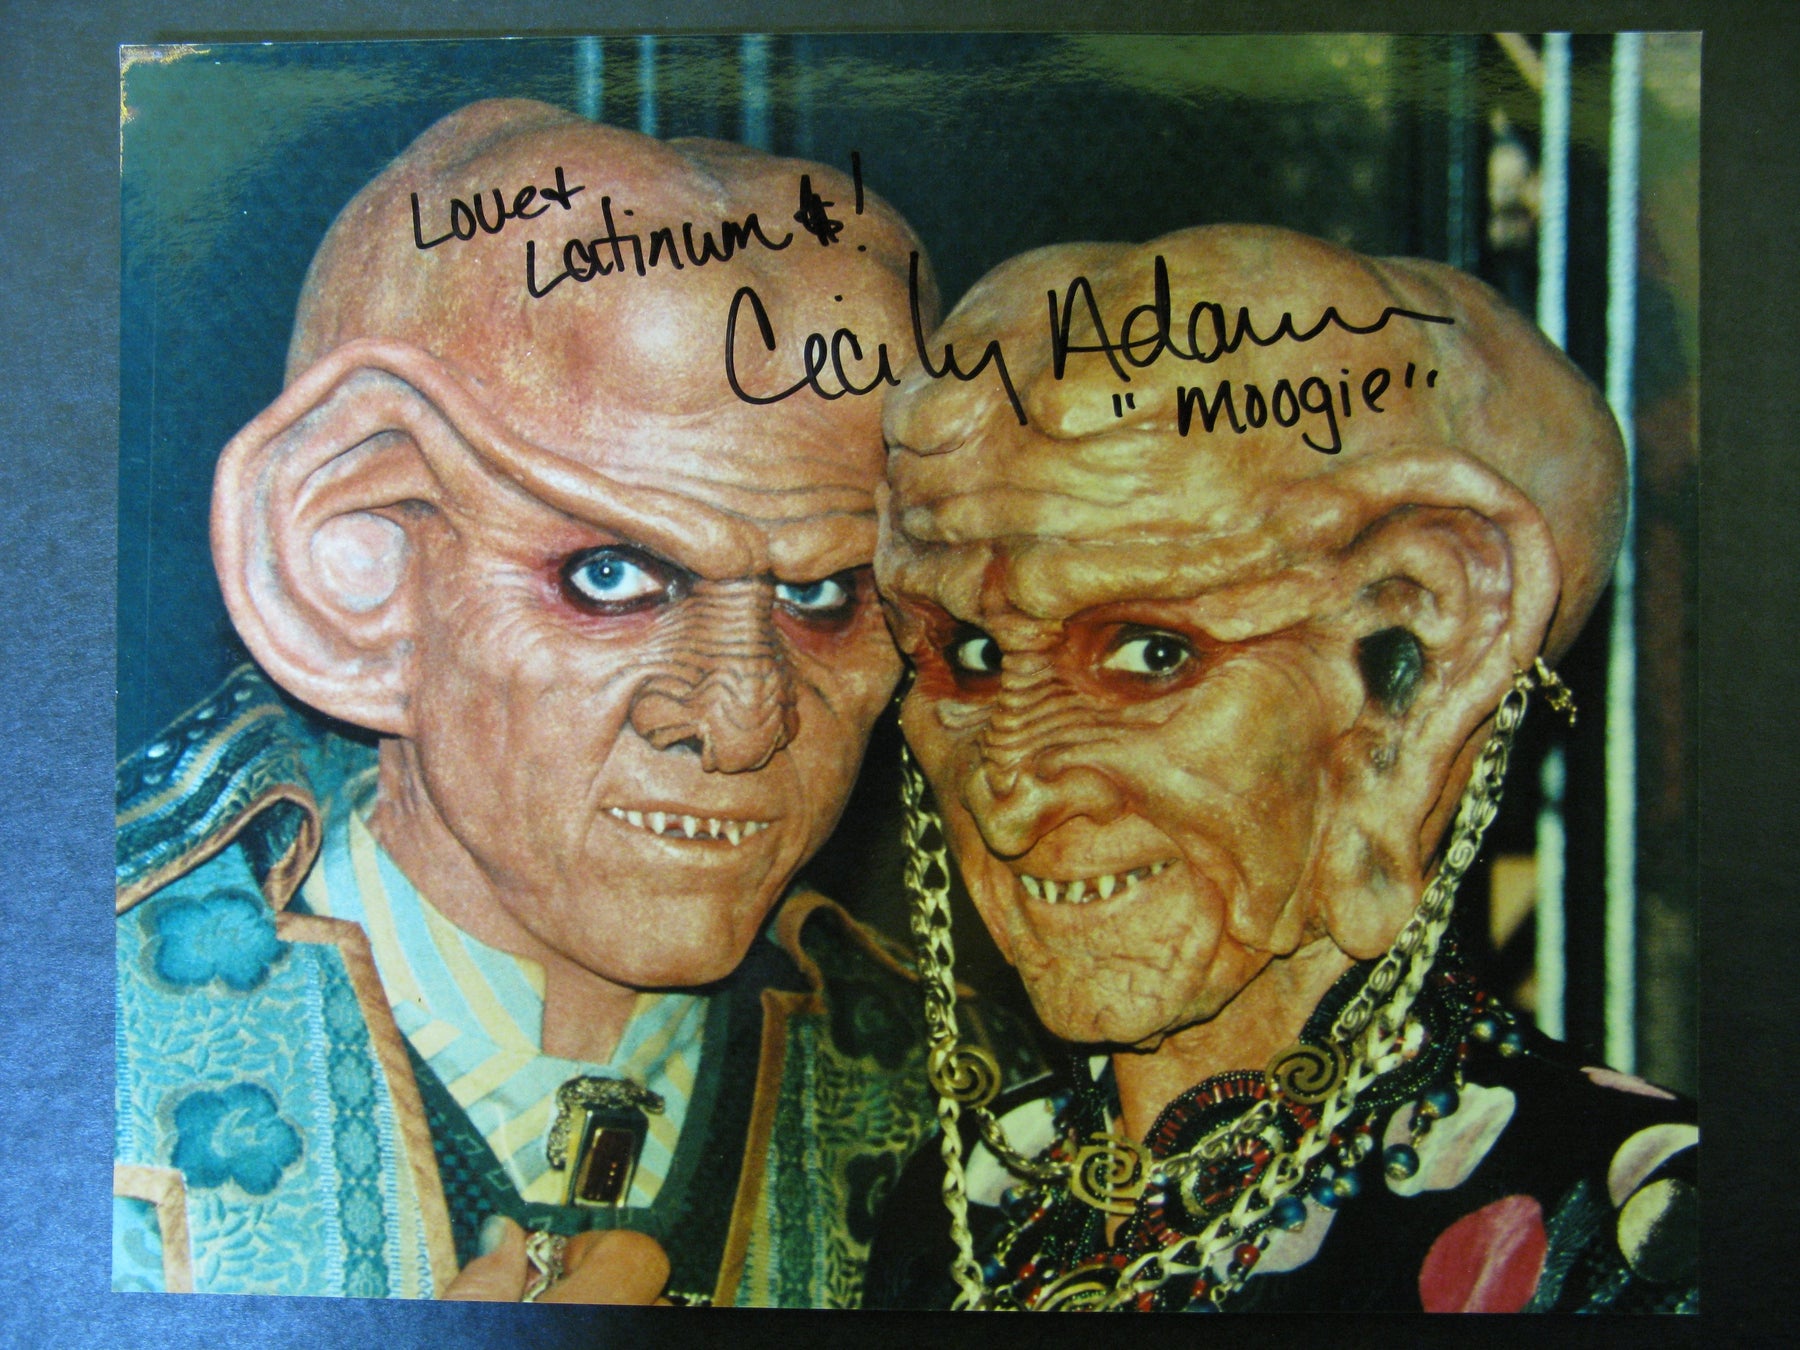 Star Trek Cecily Adams Autographed Photo